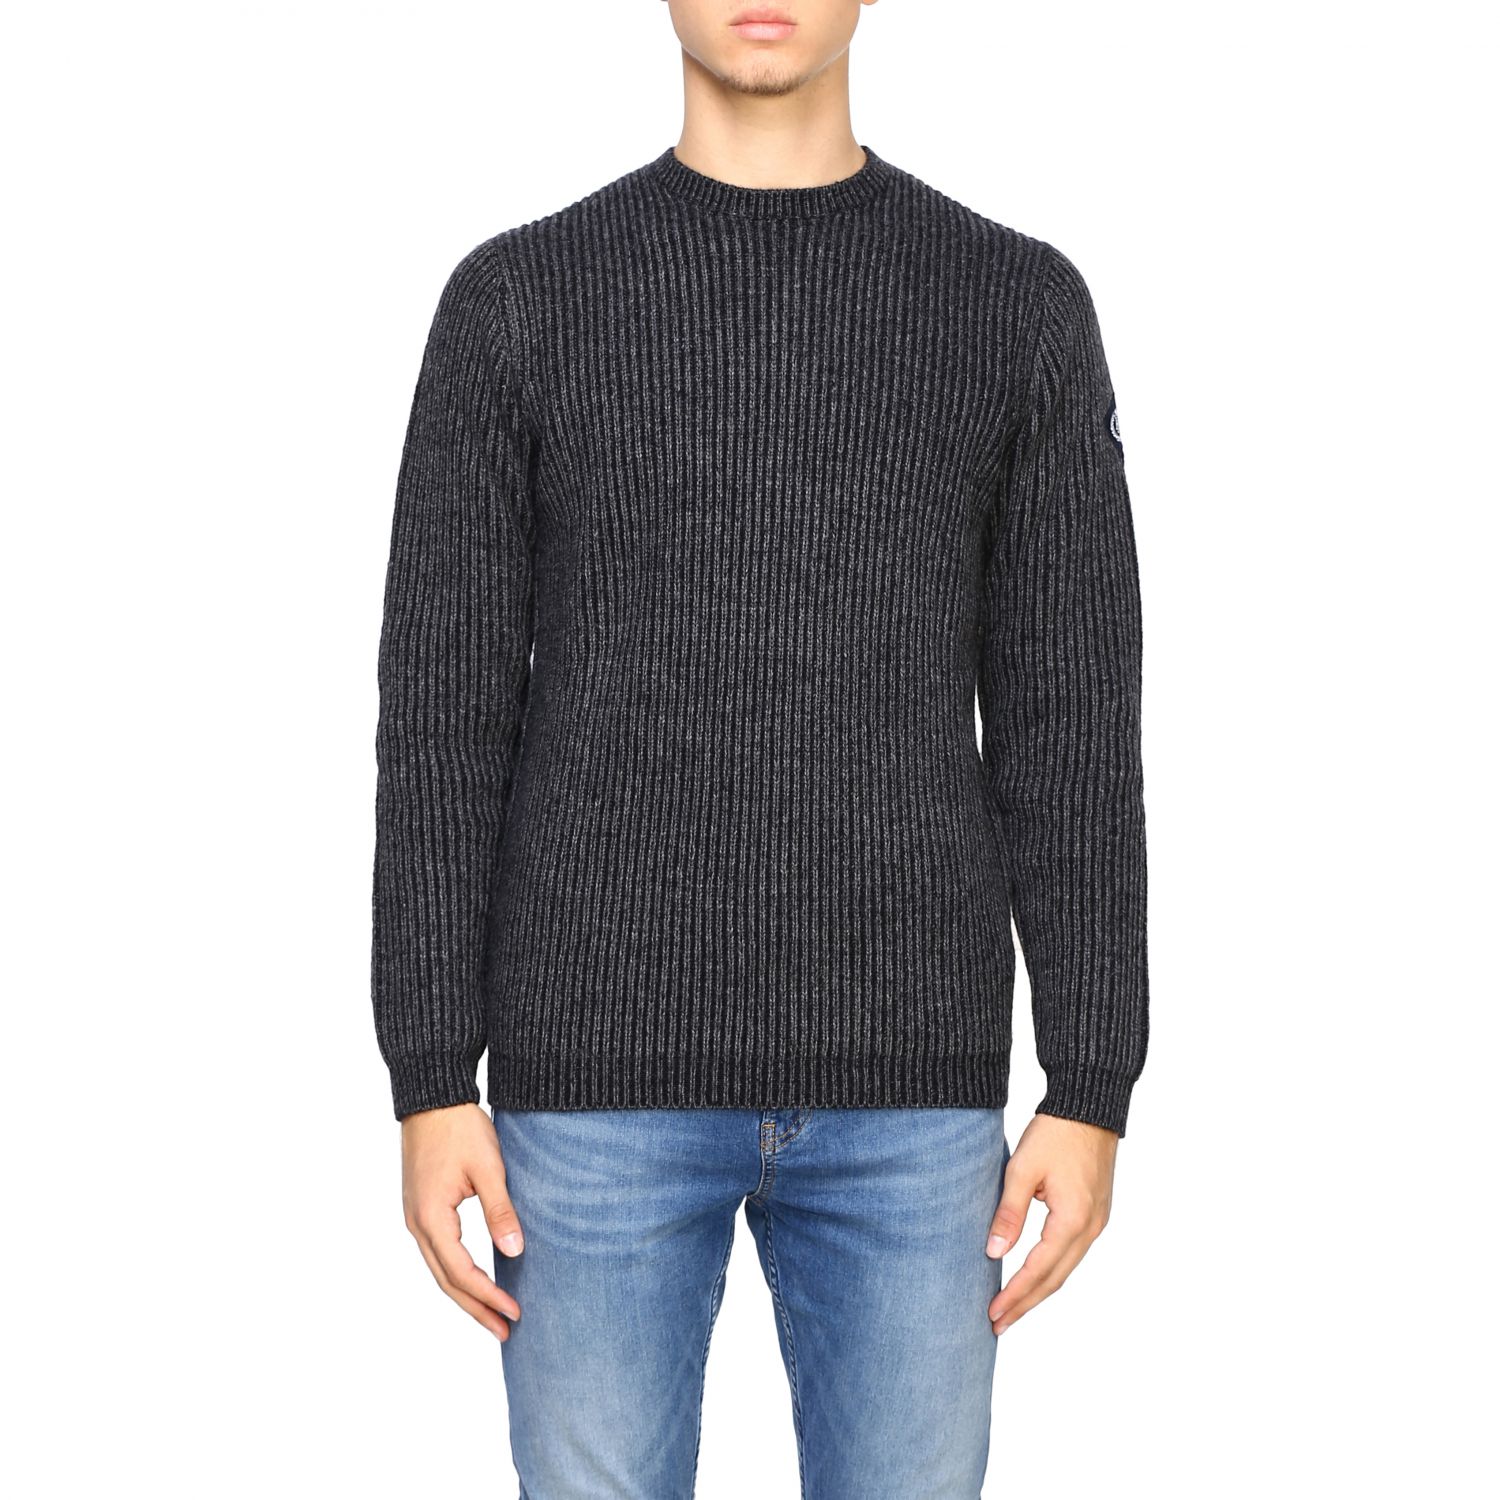 Henri Lloyd Outlet: Sweater men | Sweater Henri Lloyd Men Charcoal ...